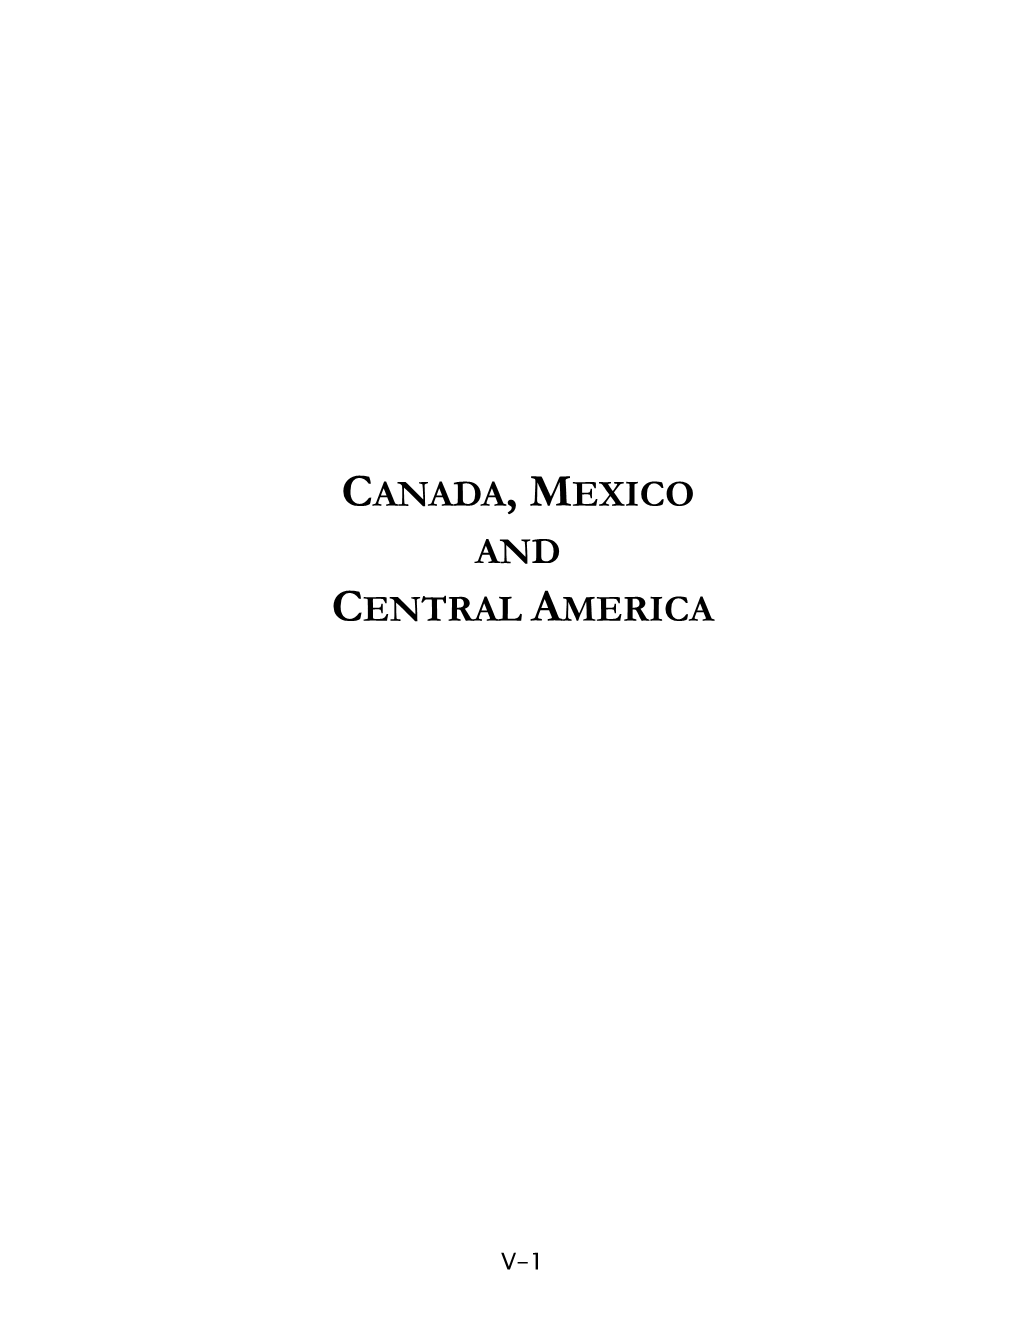 Canada, Mexico, and Central America